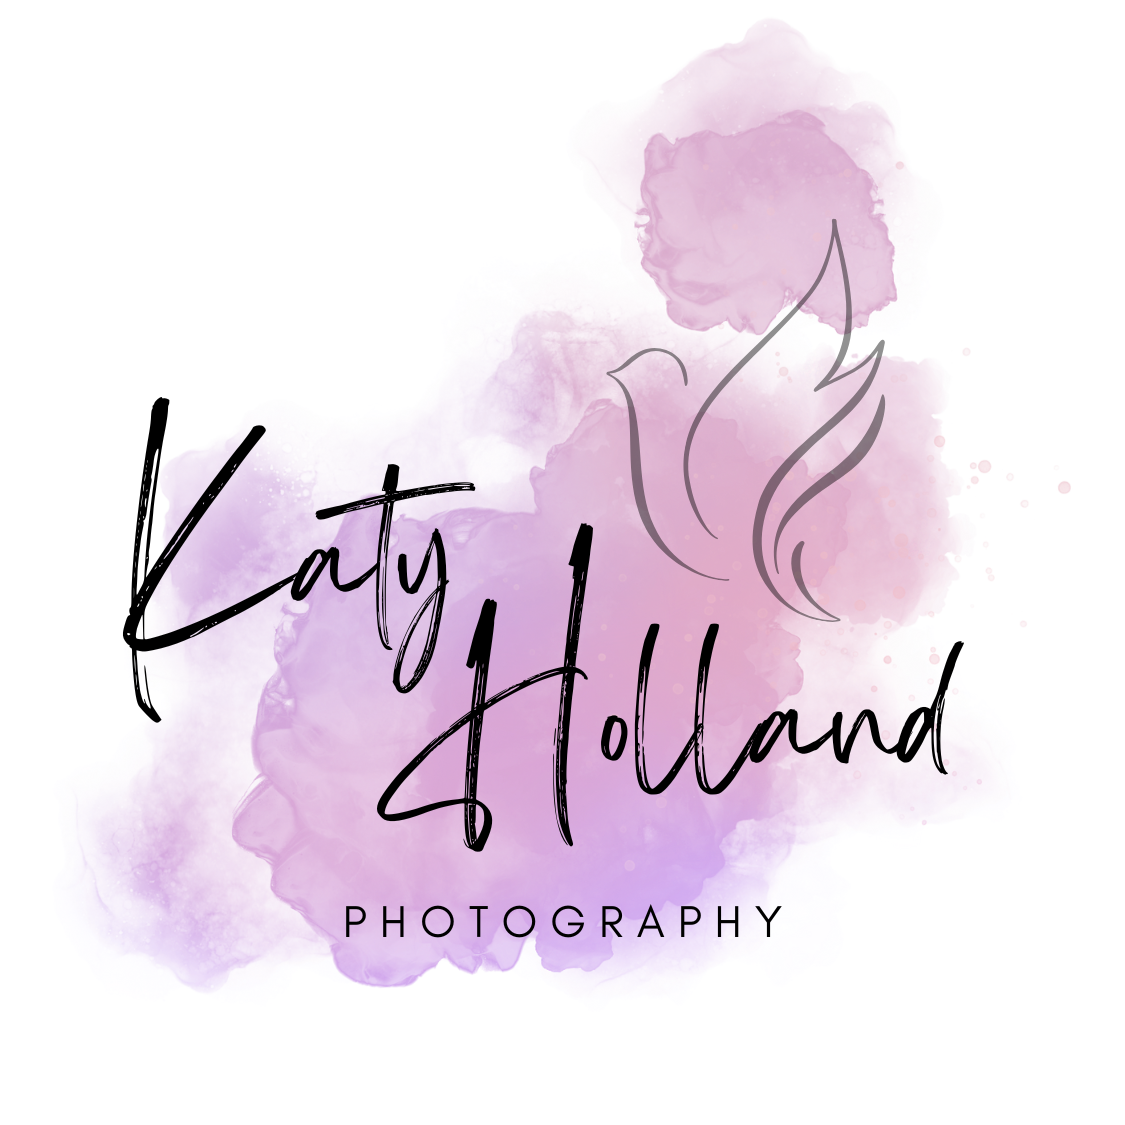 Surrey Wedding Photographer ~ Katy Holland Photography